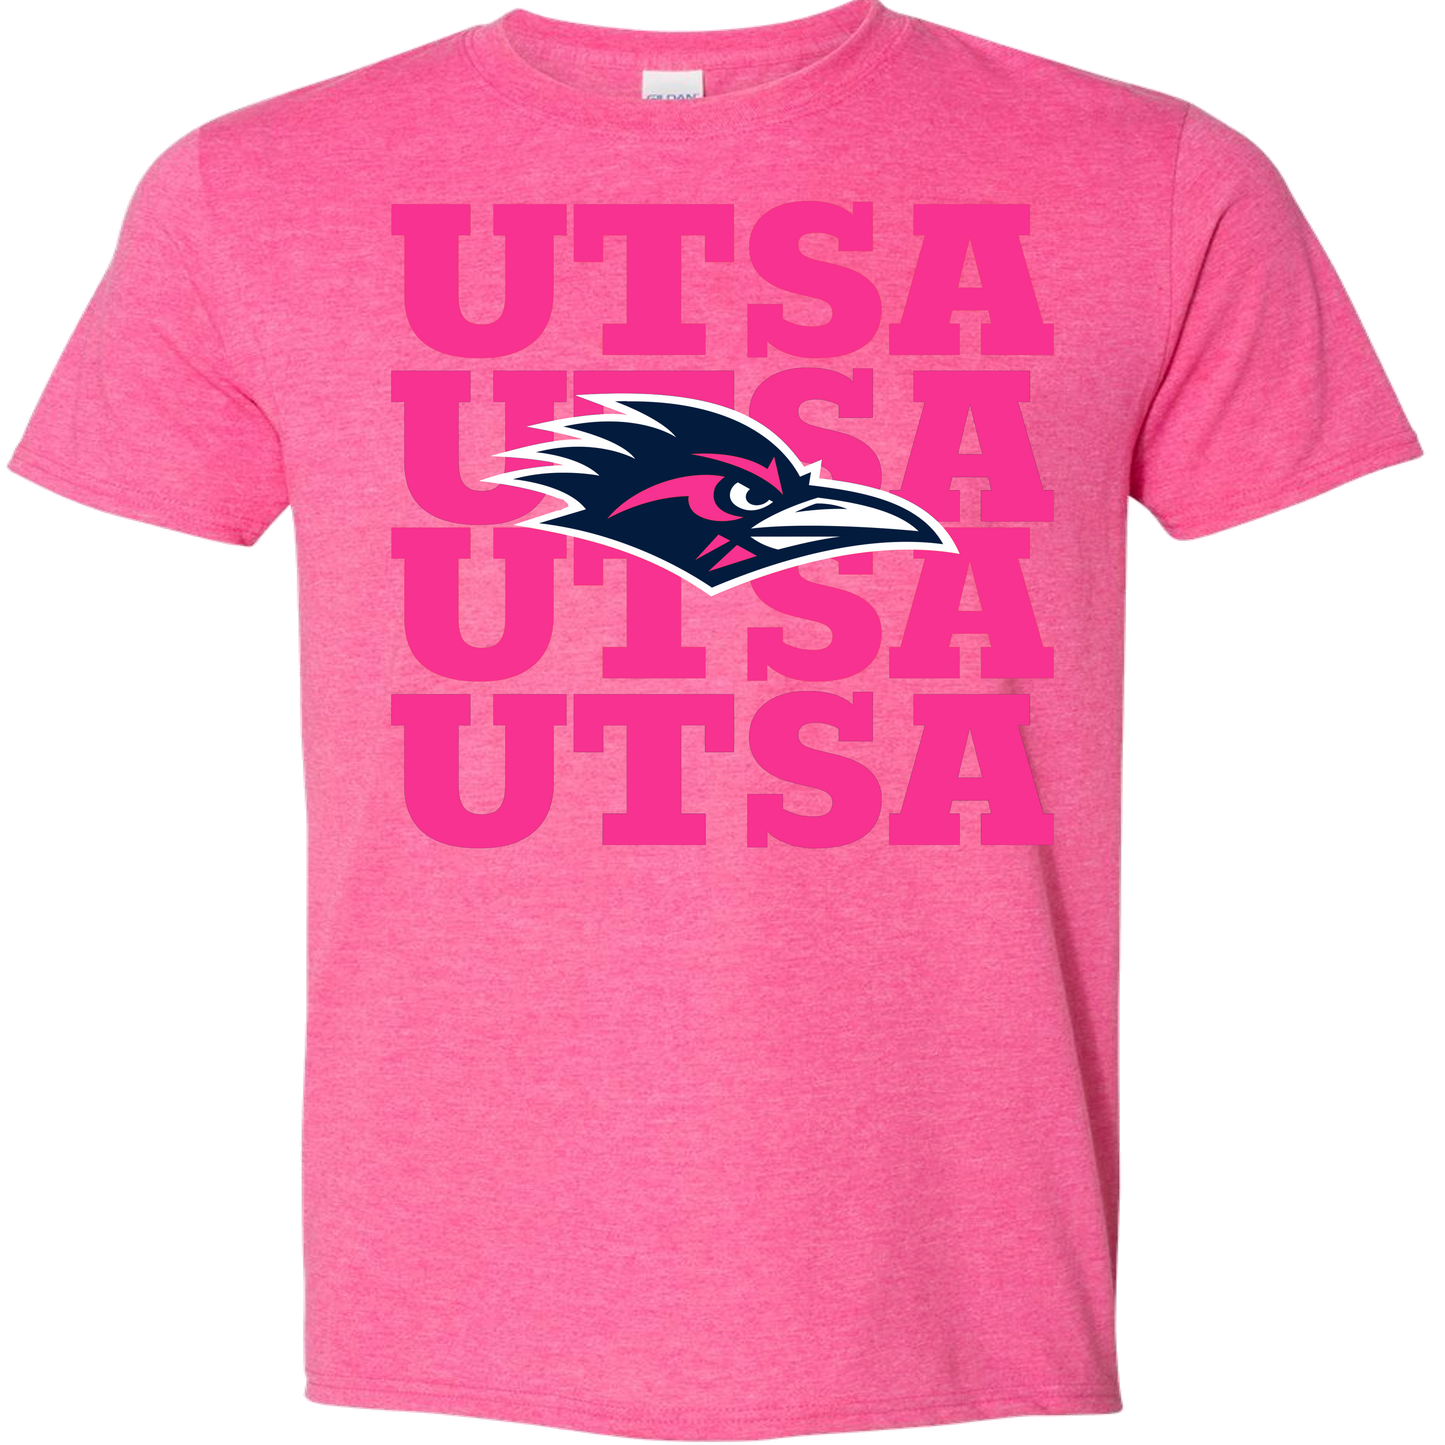 UTSA Breast Cancer Awareness Shirt